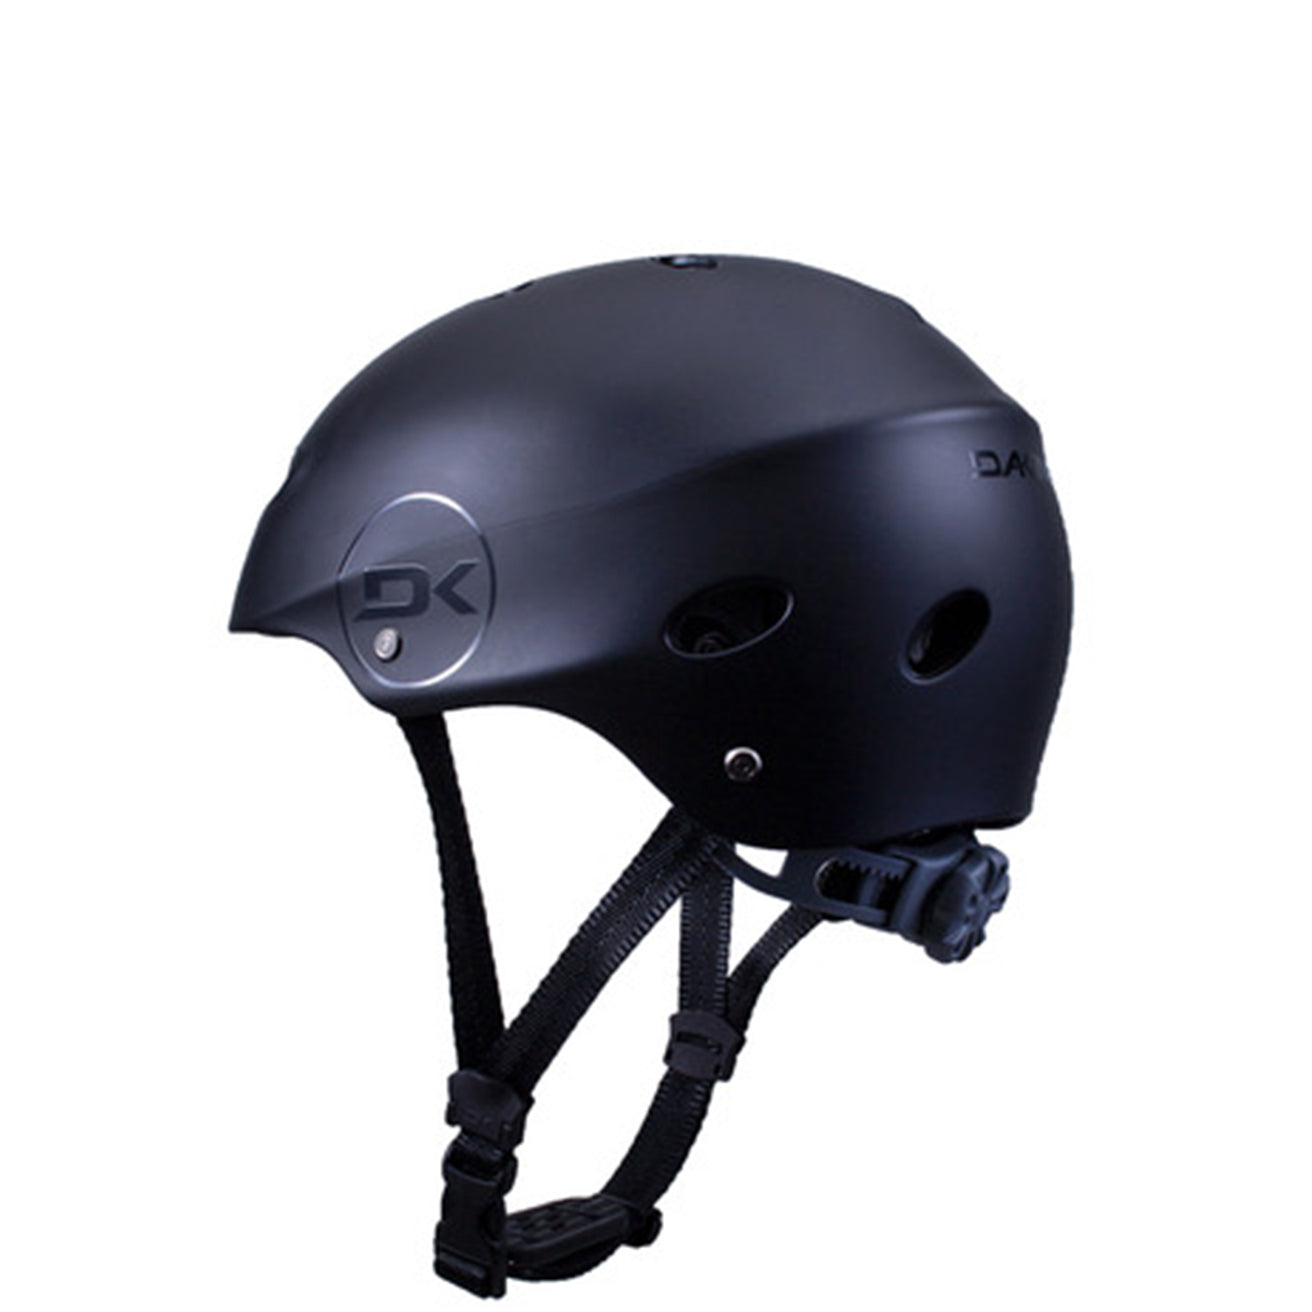 Dakine | Renegade Helmet - Black